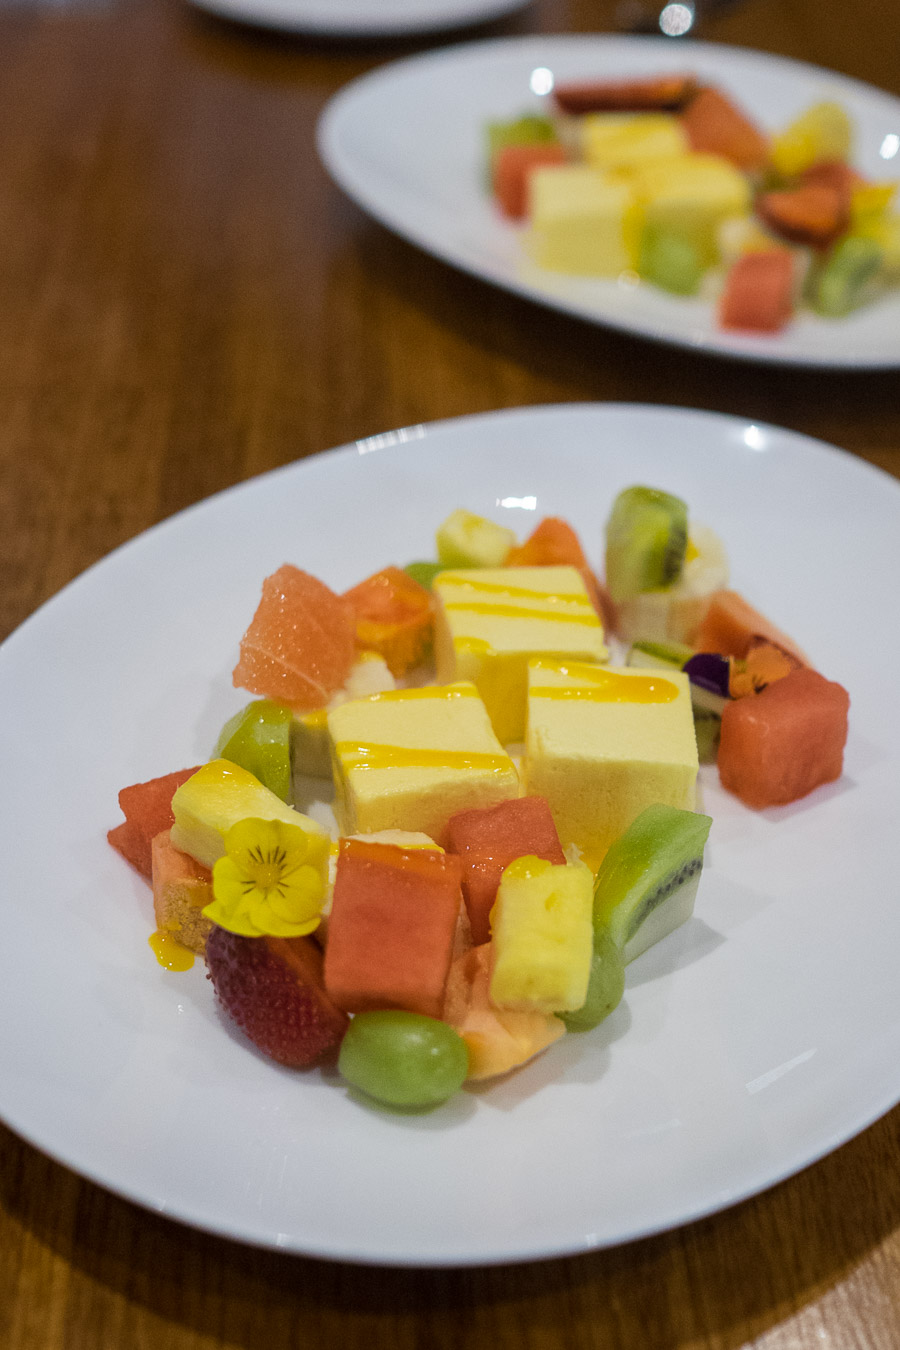 Mango semifreddo with fruit salad